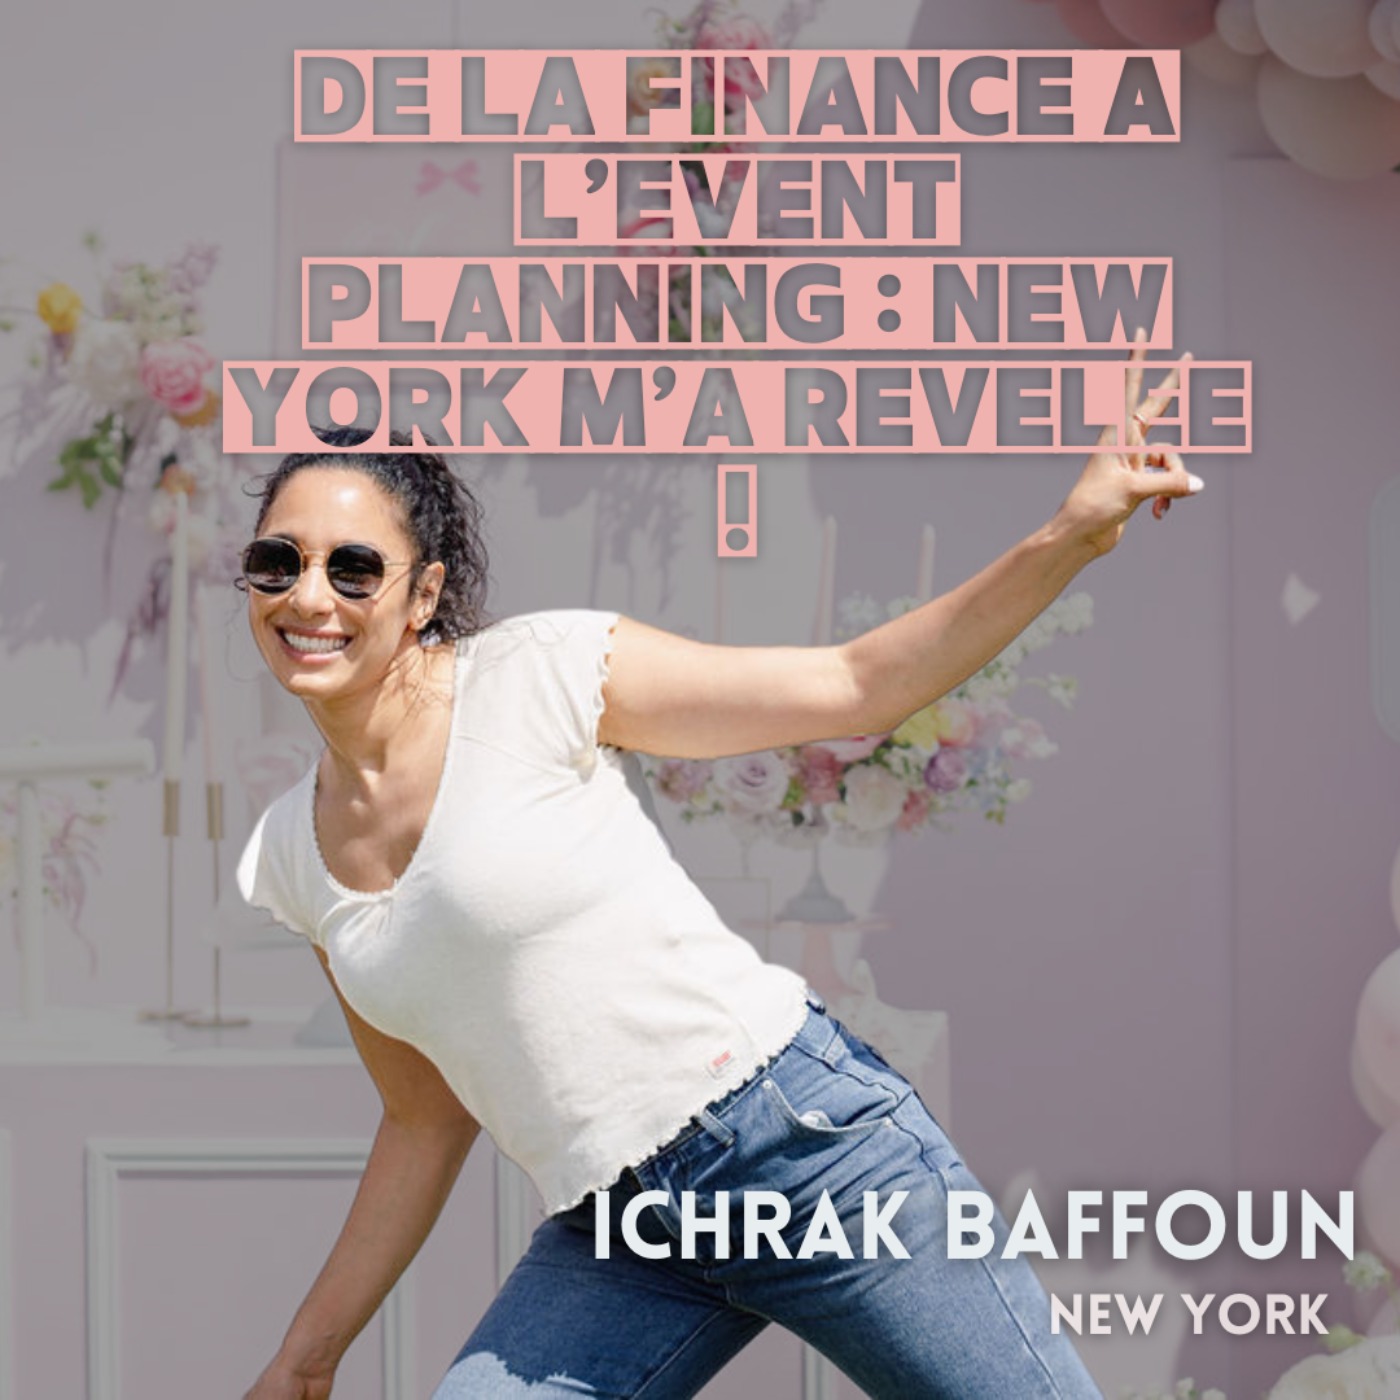 Ichrak Baffoun : de la finance à l’event planning ... New York m’a révélée !